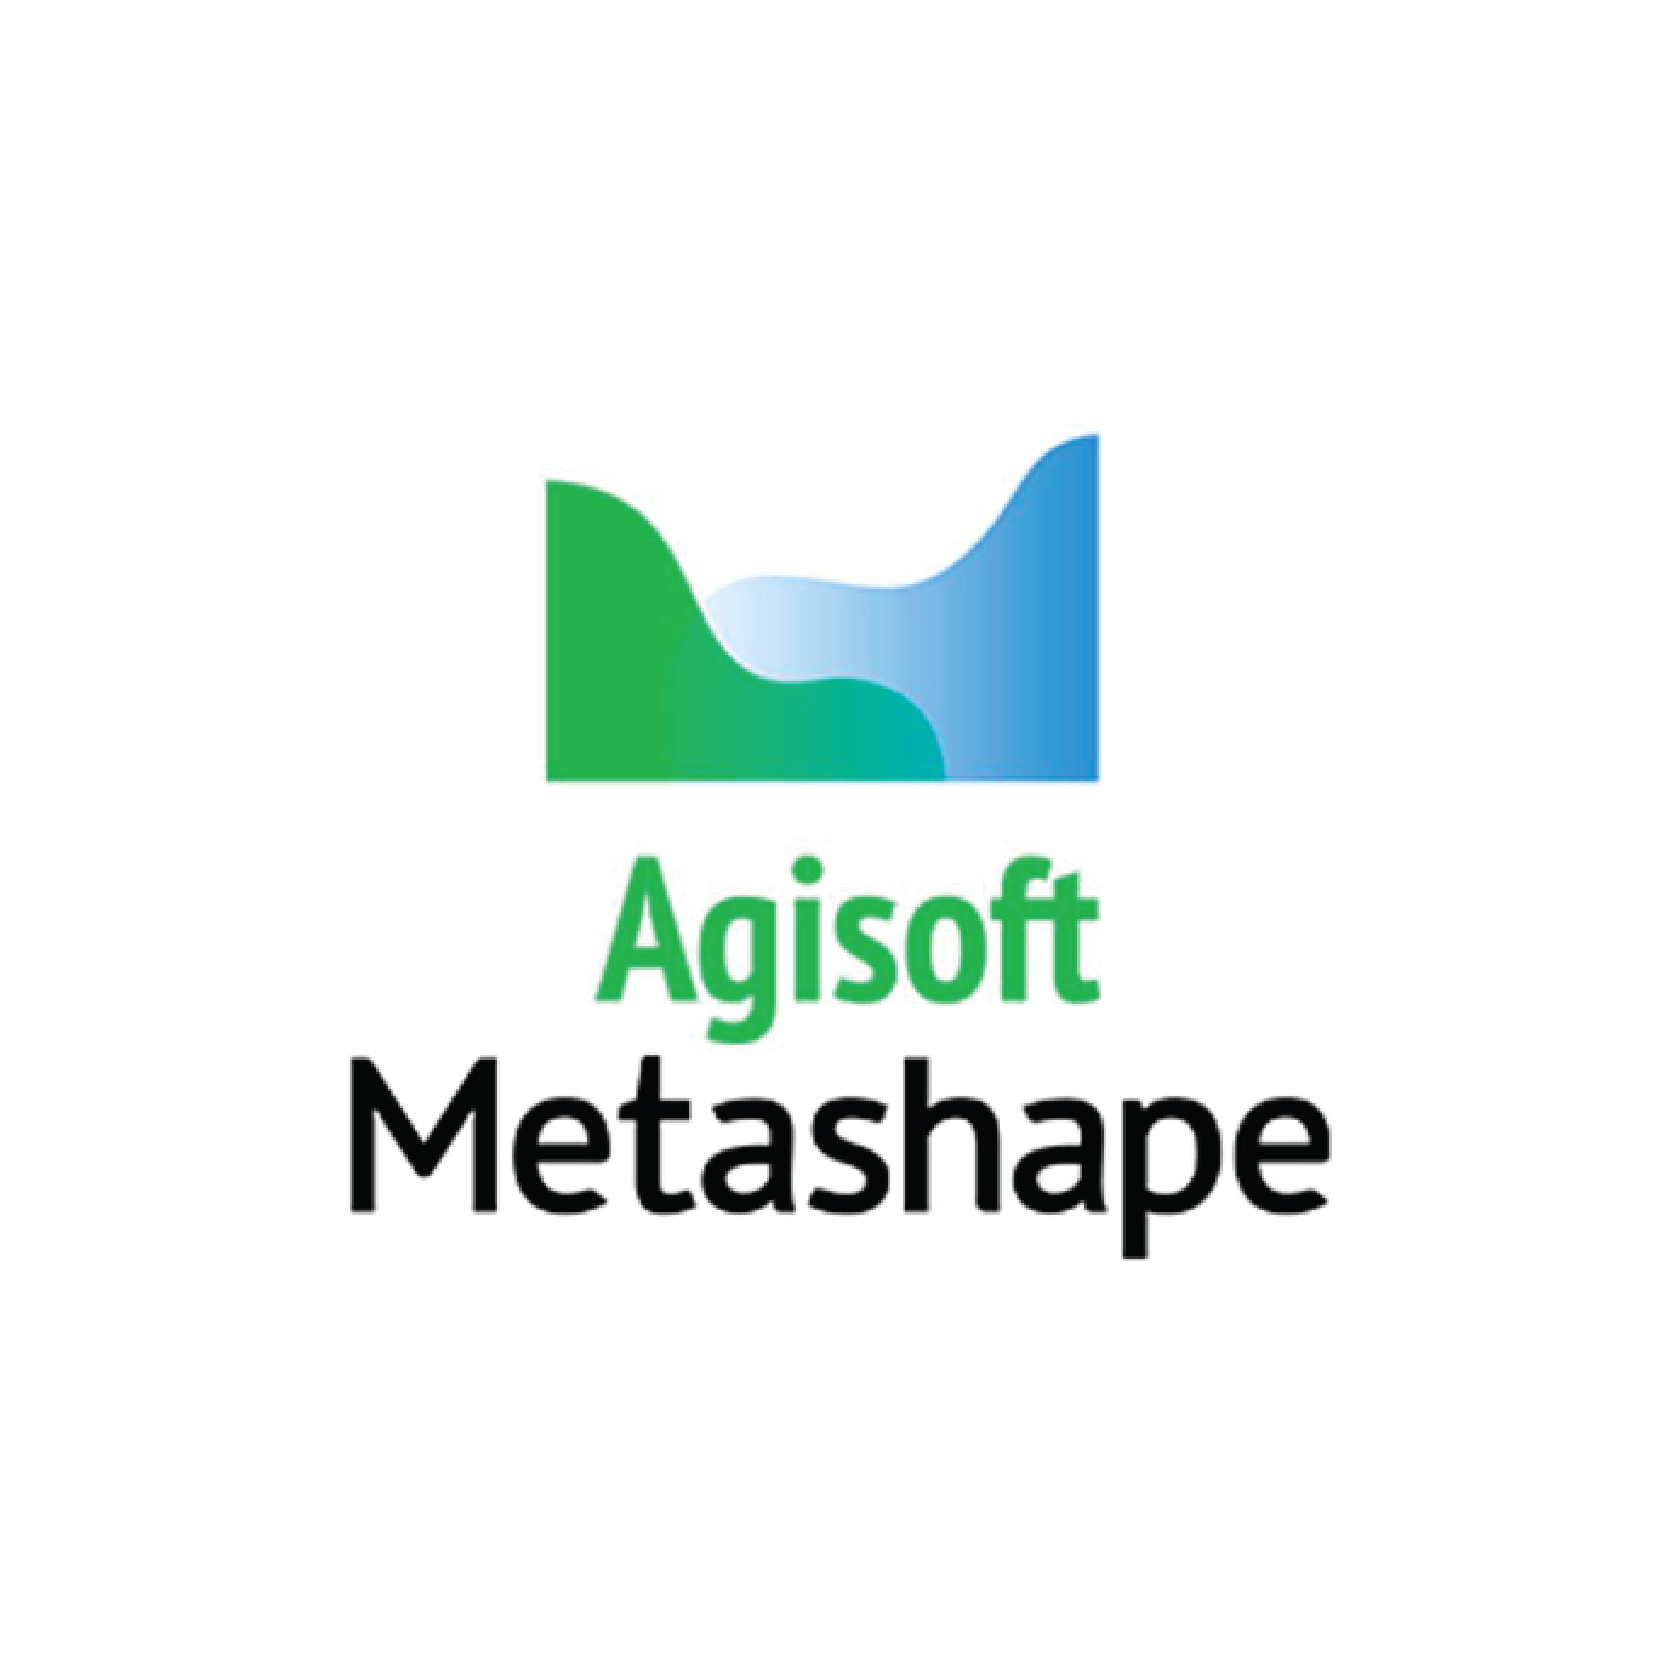 Agidoft Metashape-01